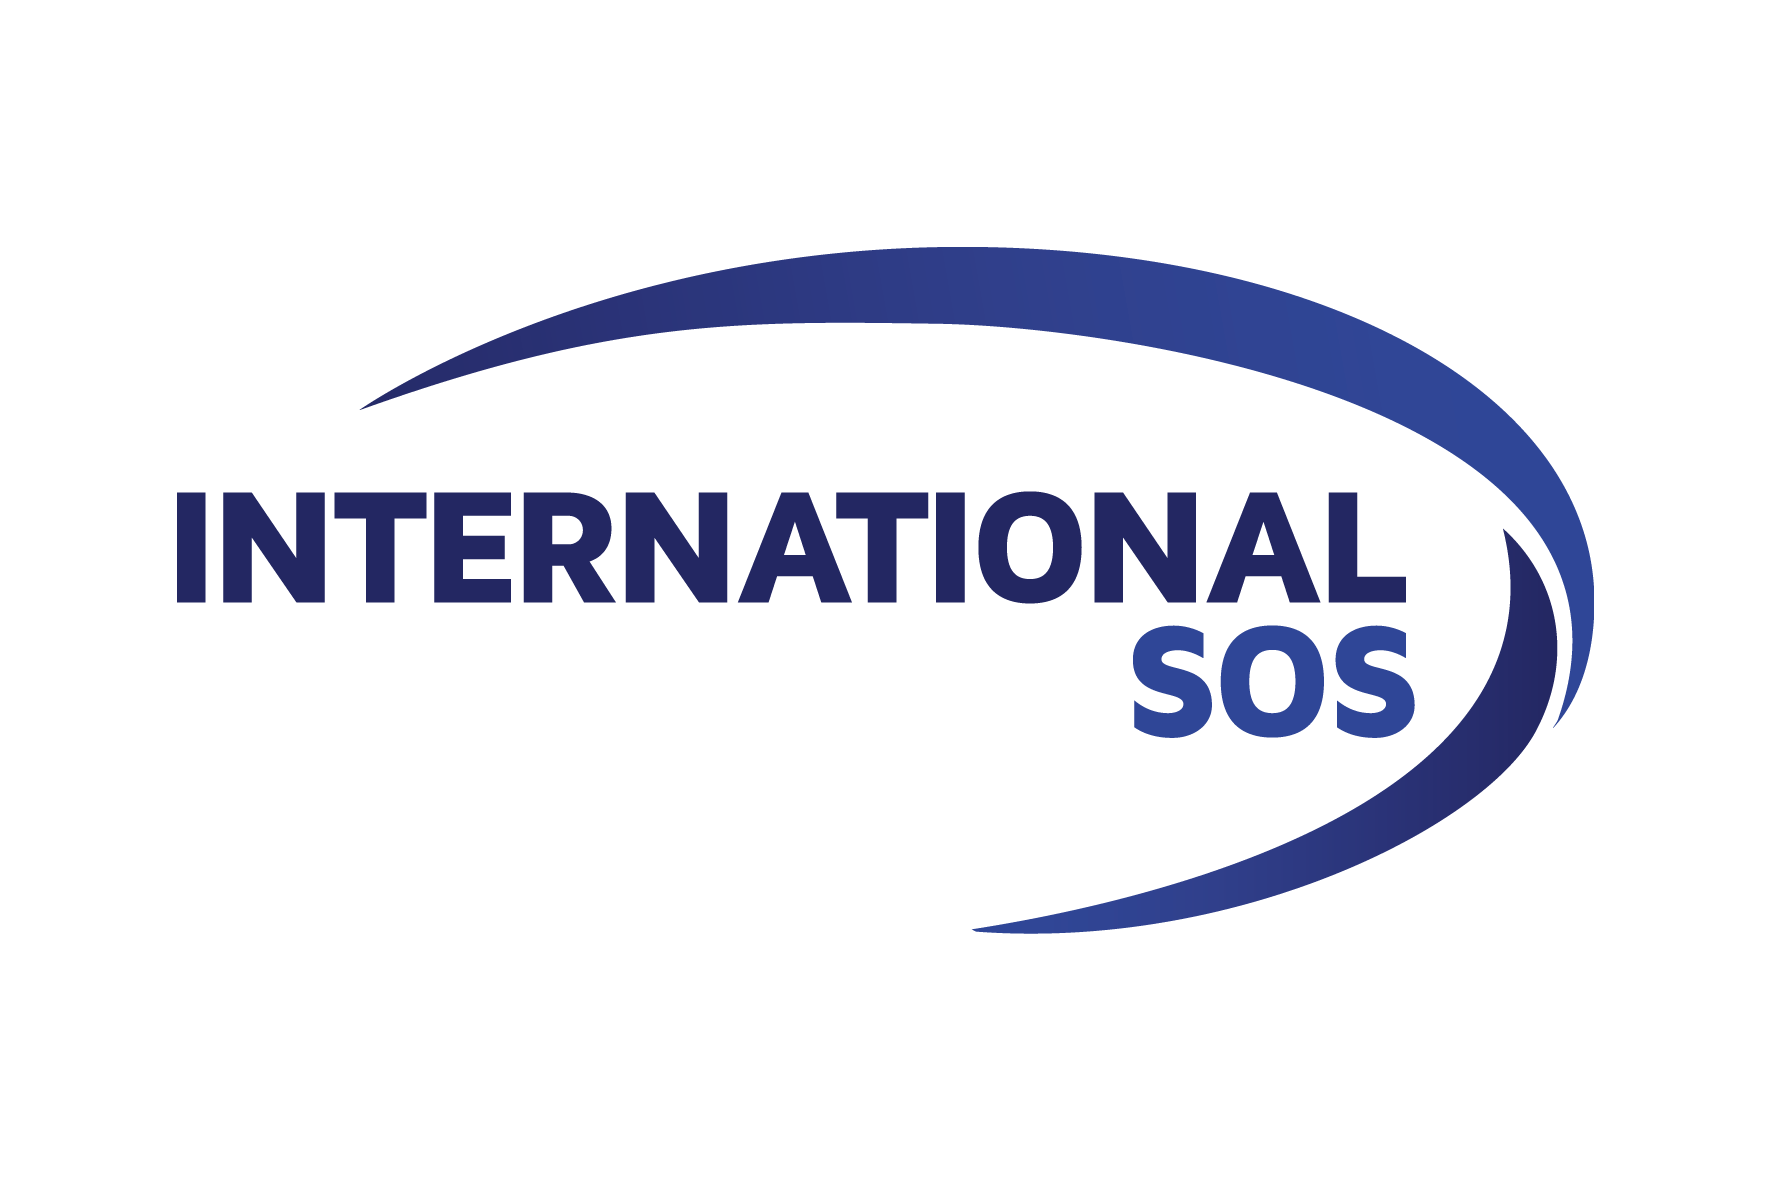 the international sos logo